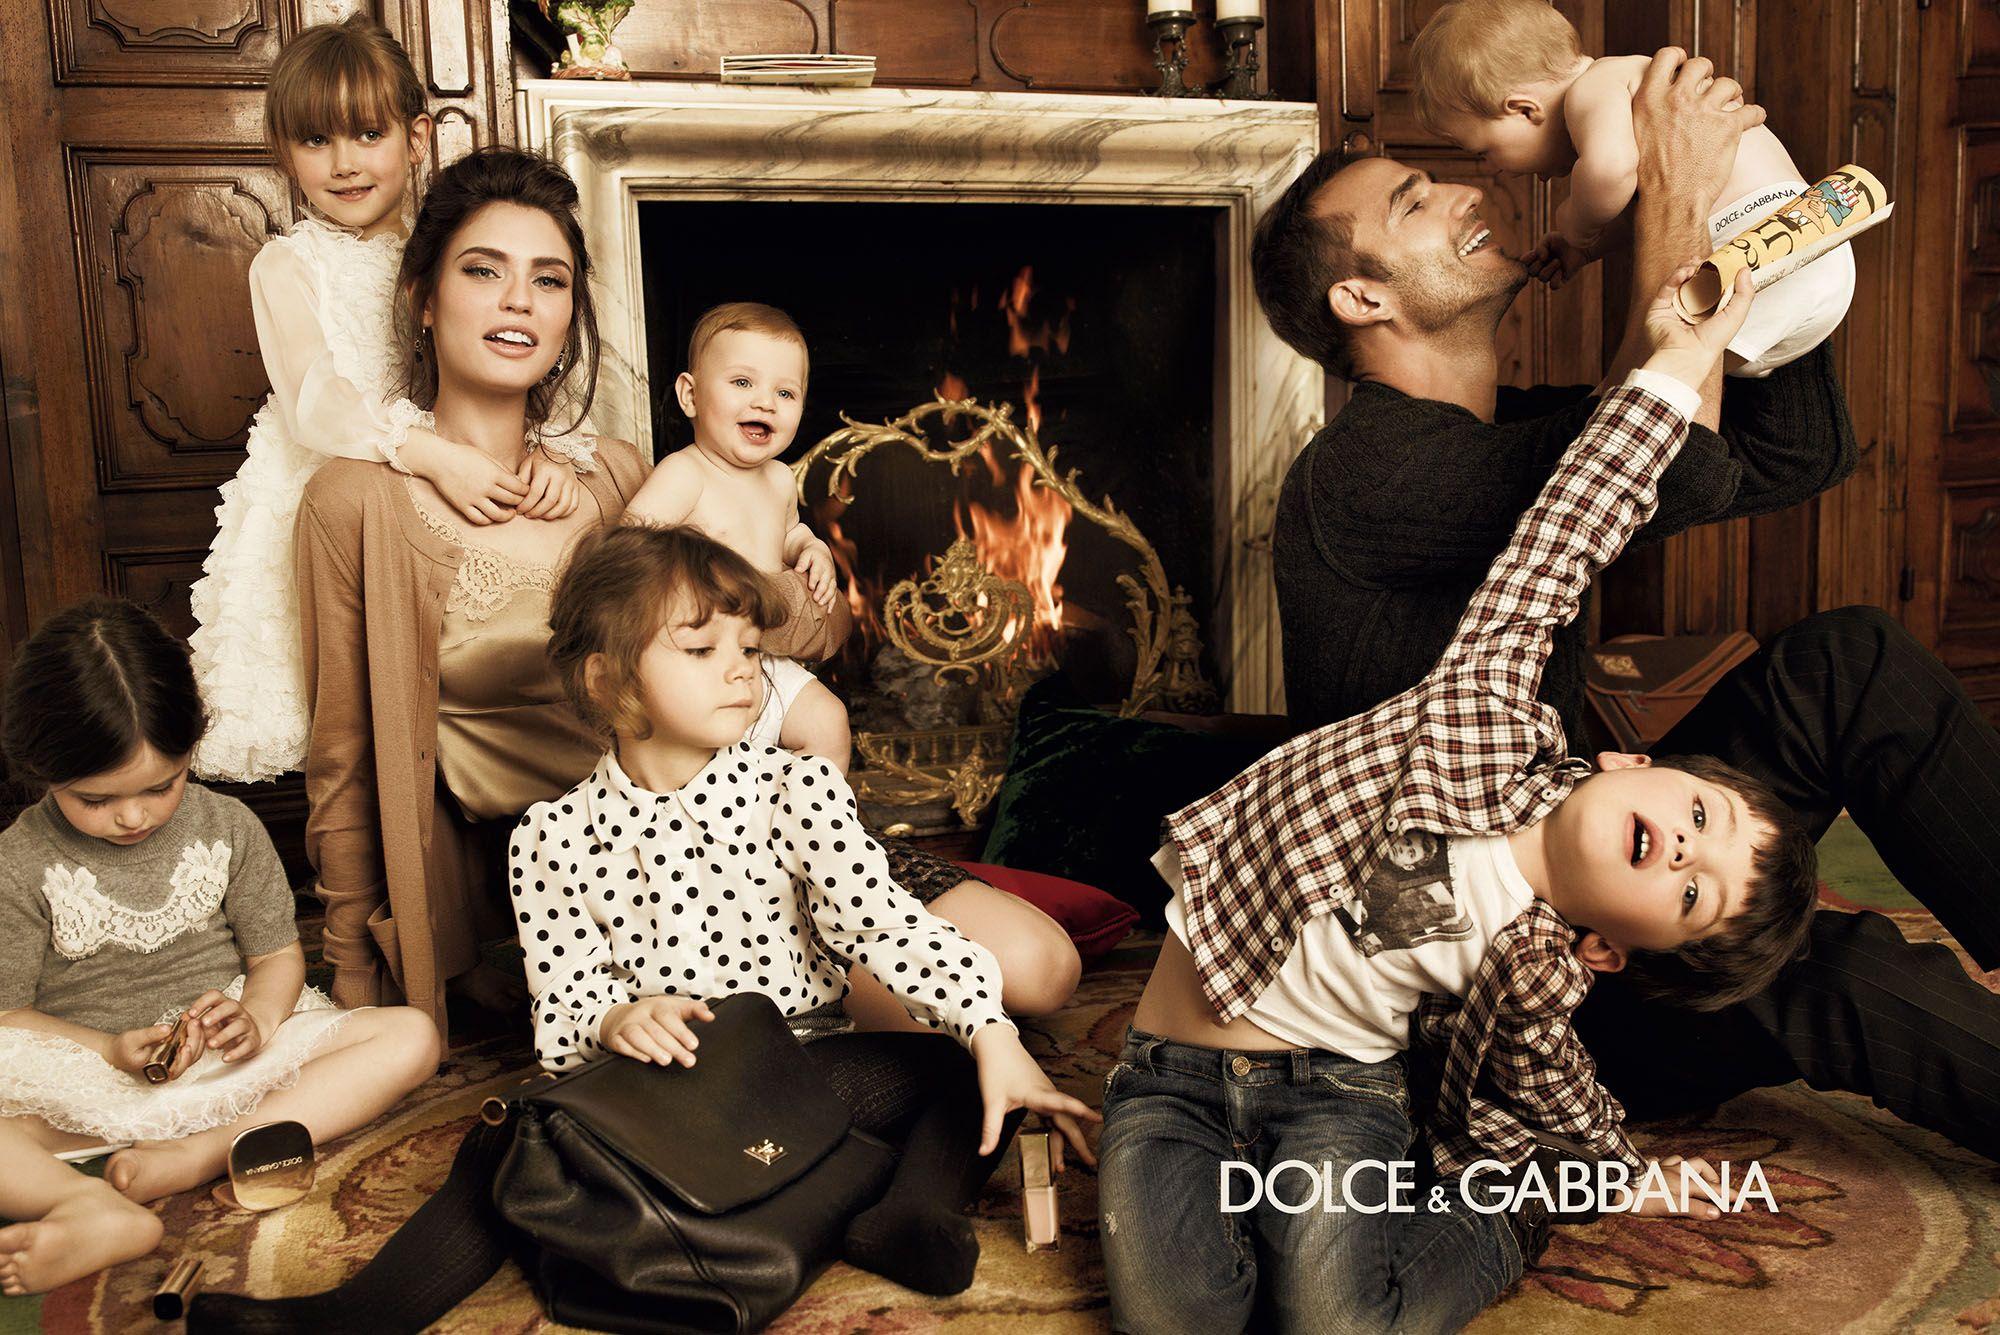 Dolce Gabbana Wallpaper